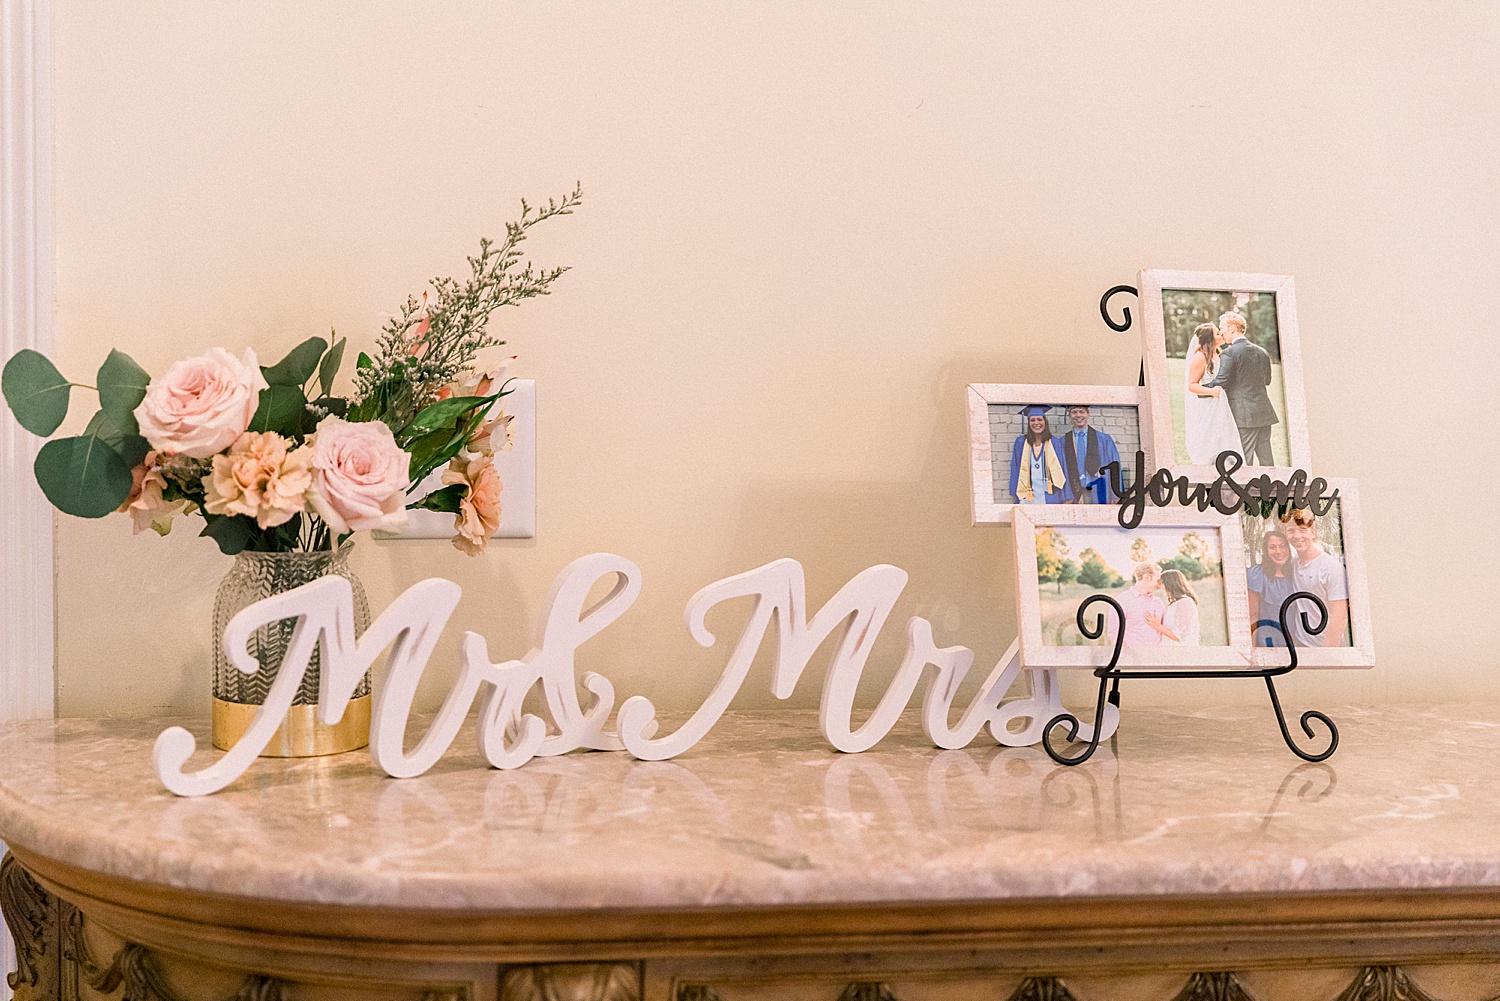 Mr. + Mrs. sign